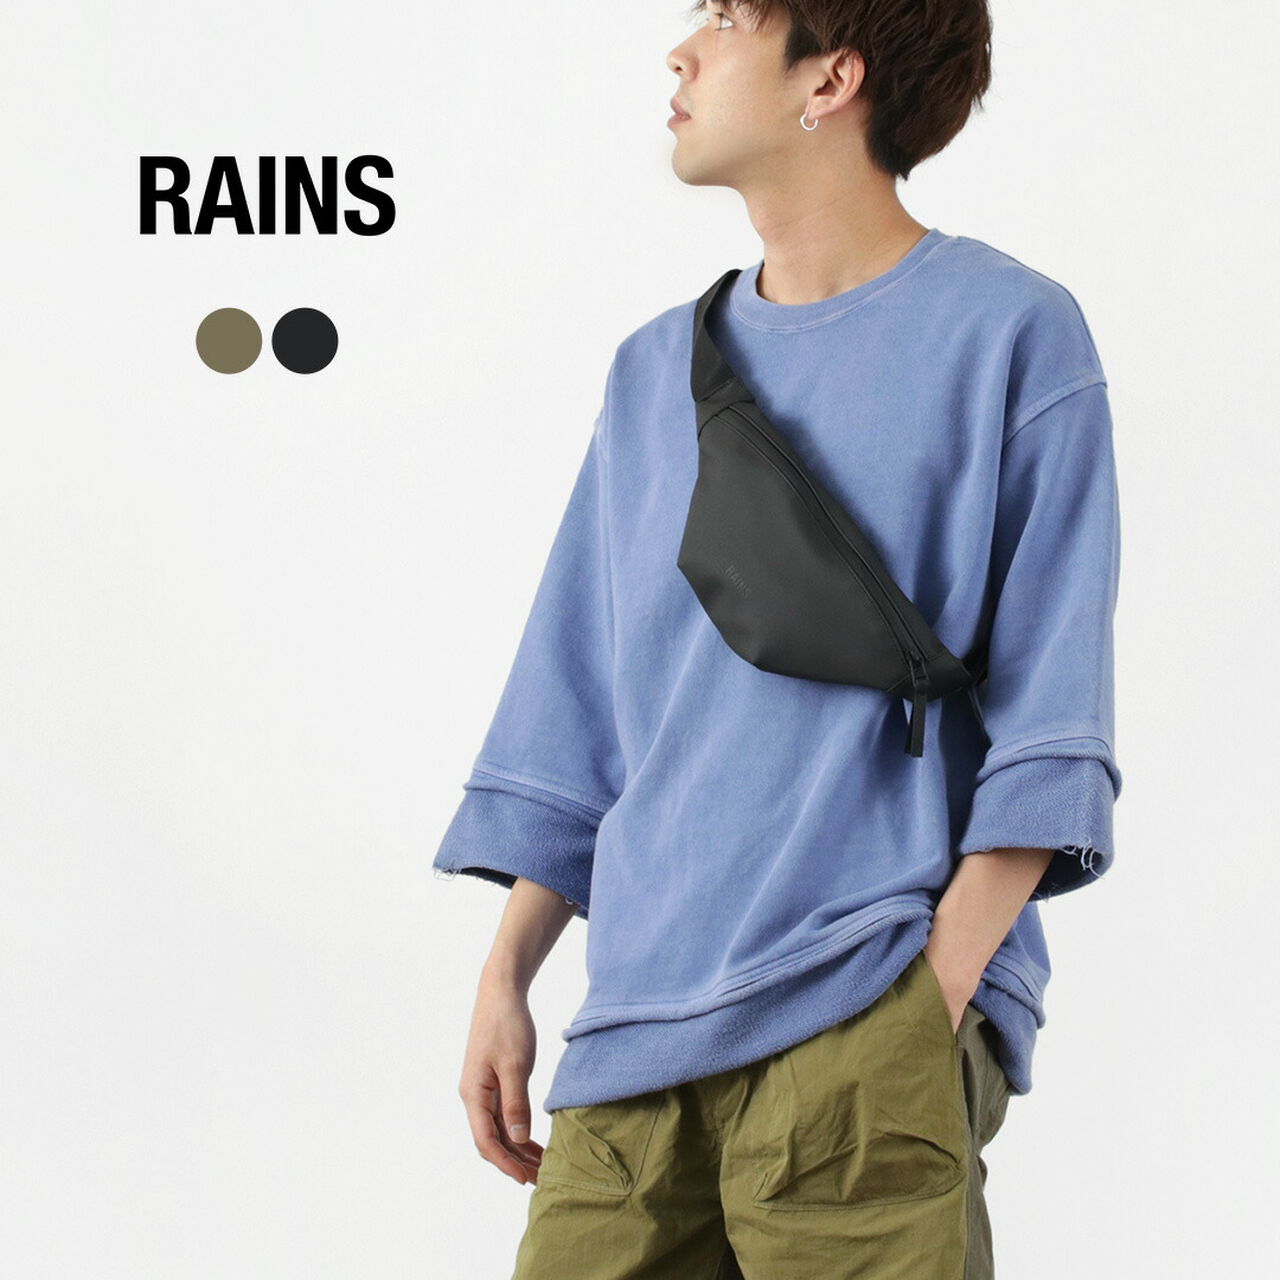 Rains Bum Bag Mini